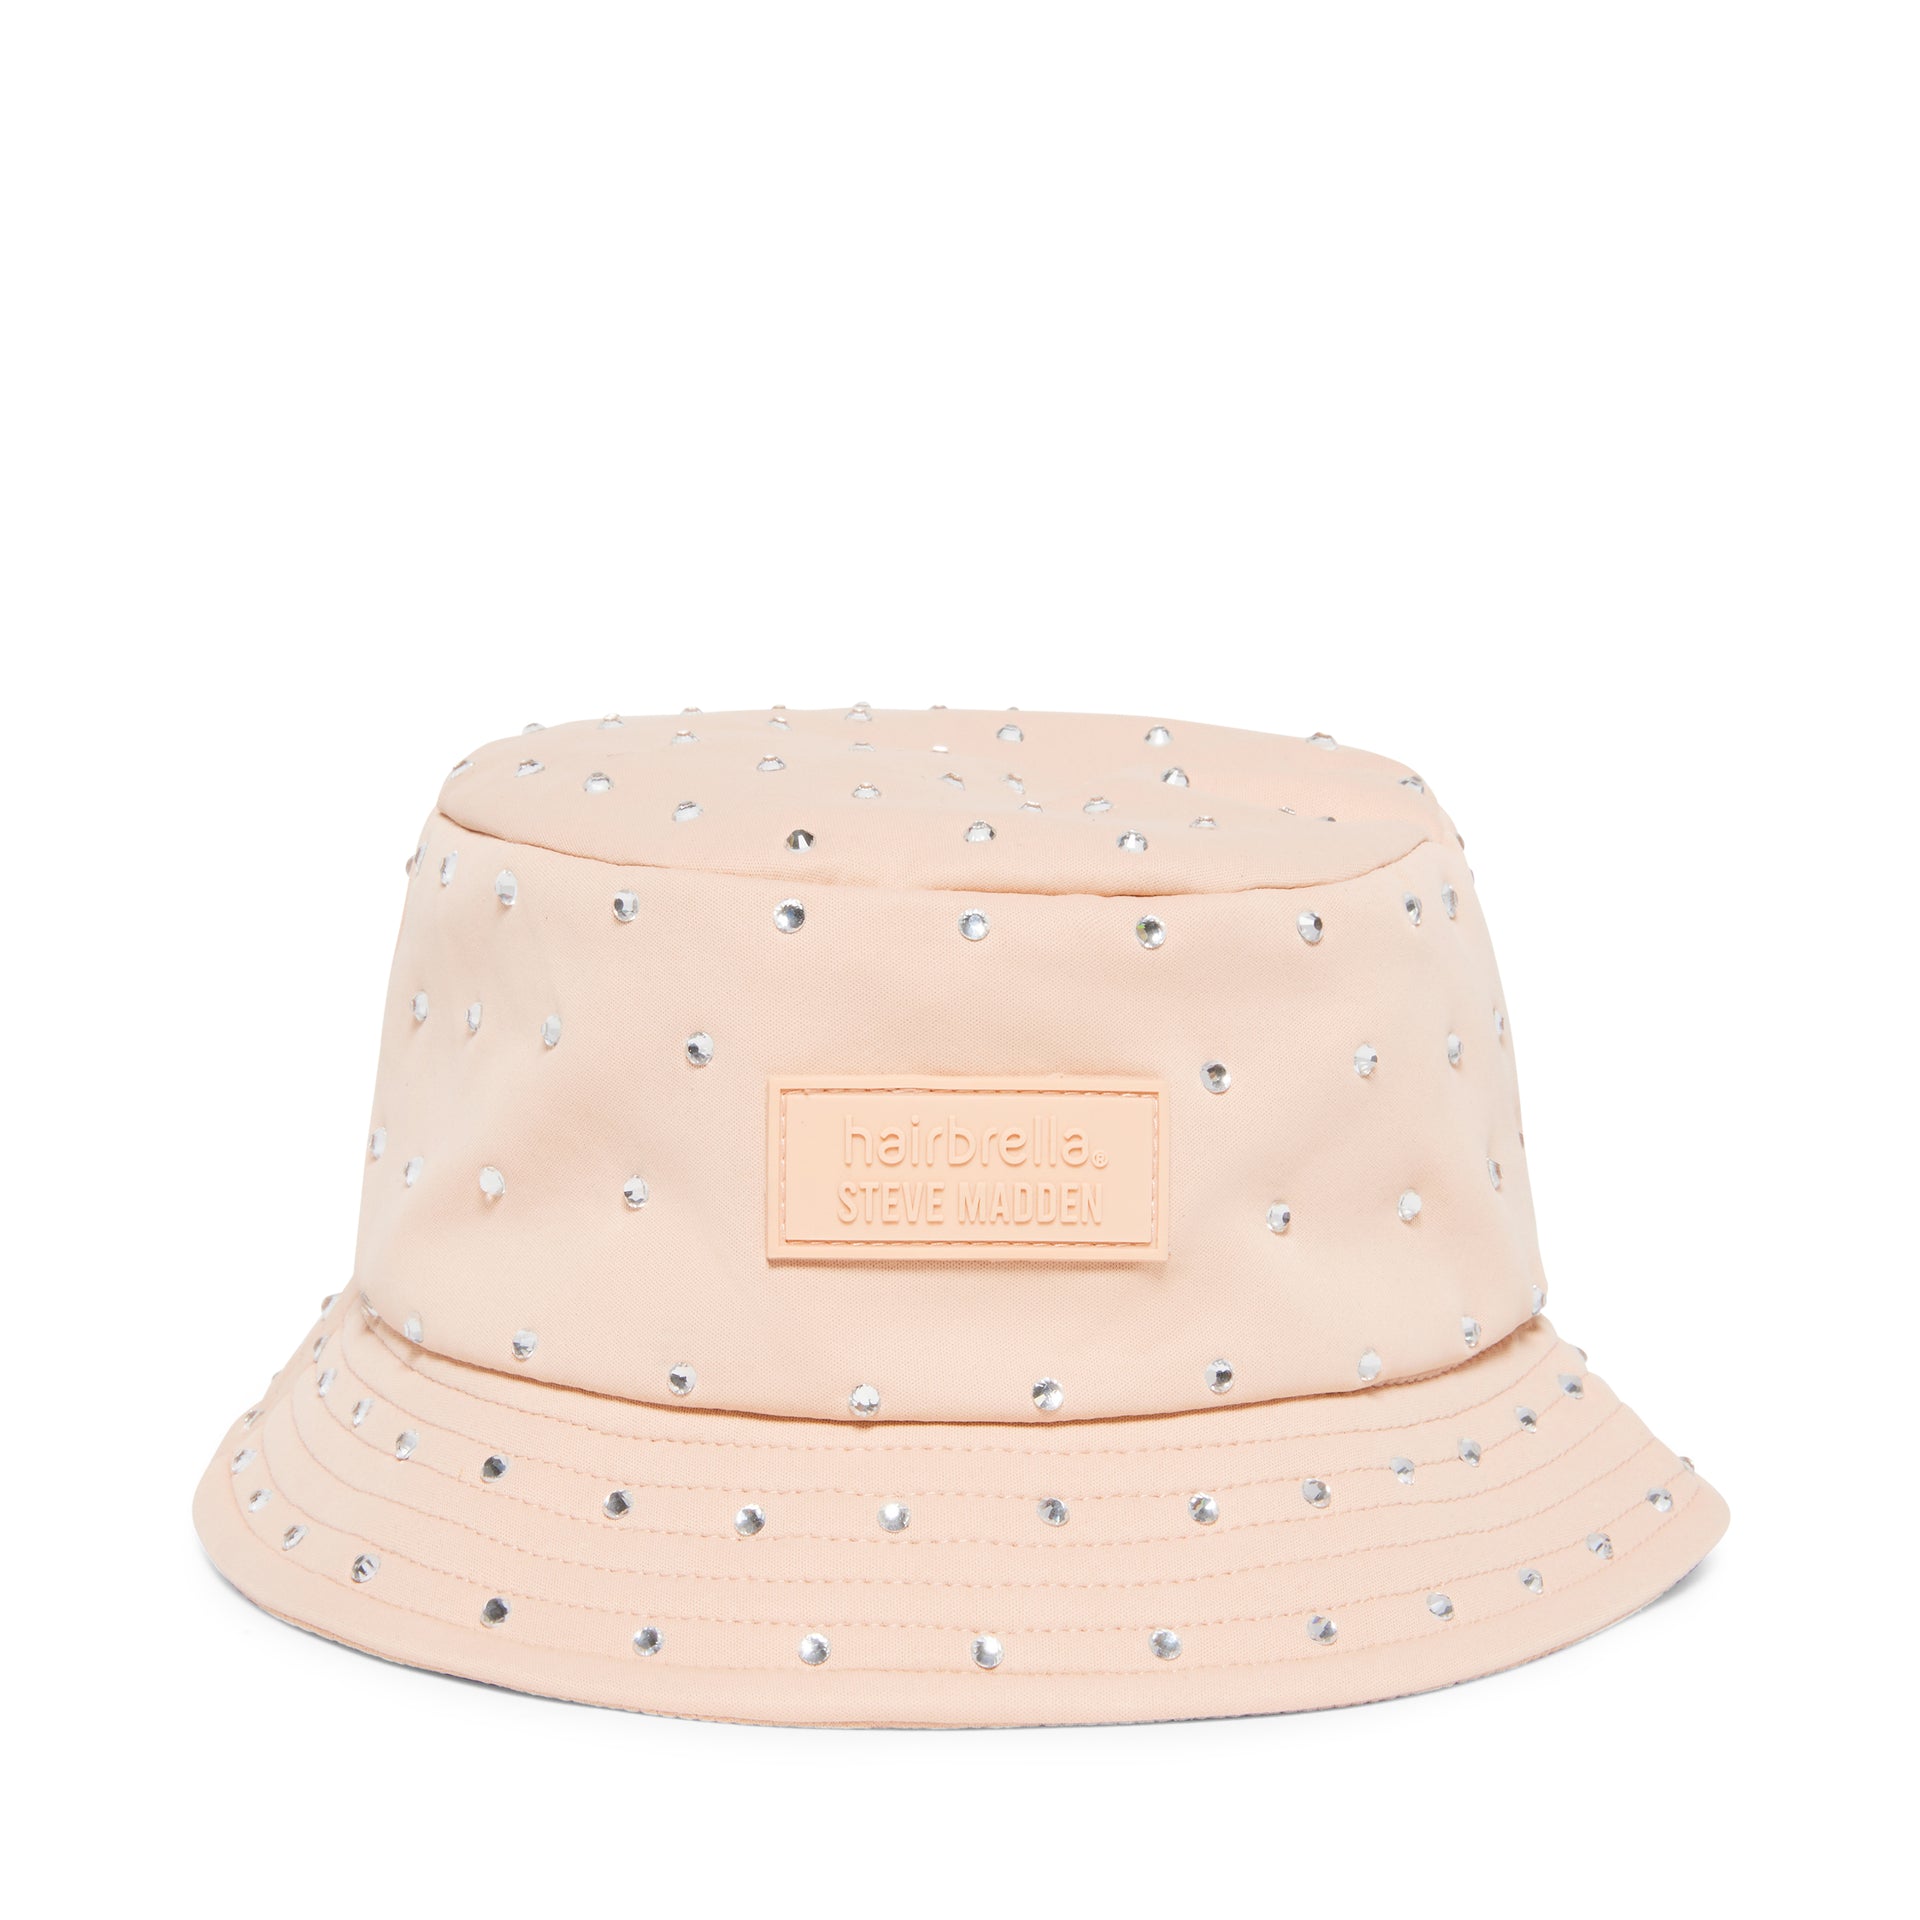 Satin-Lined Bucket Hats for Men and Women, Rain Hat, Waterproof, Sun Hat